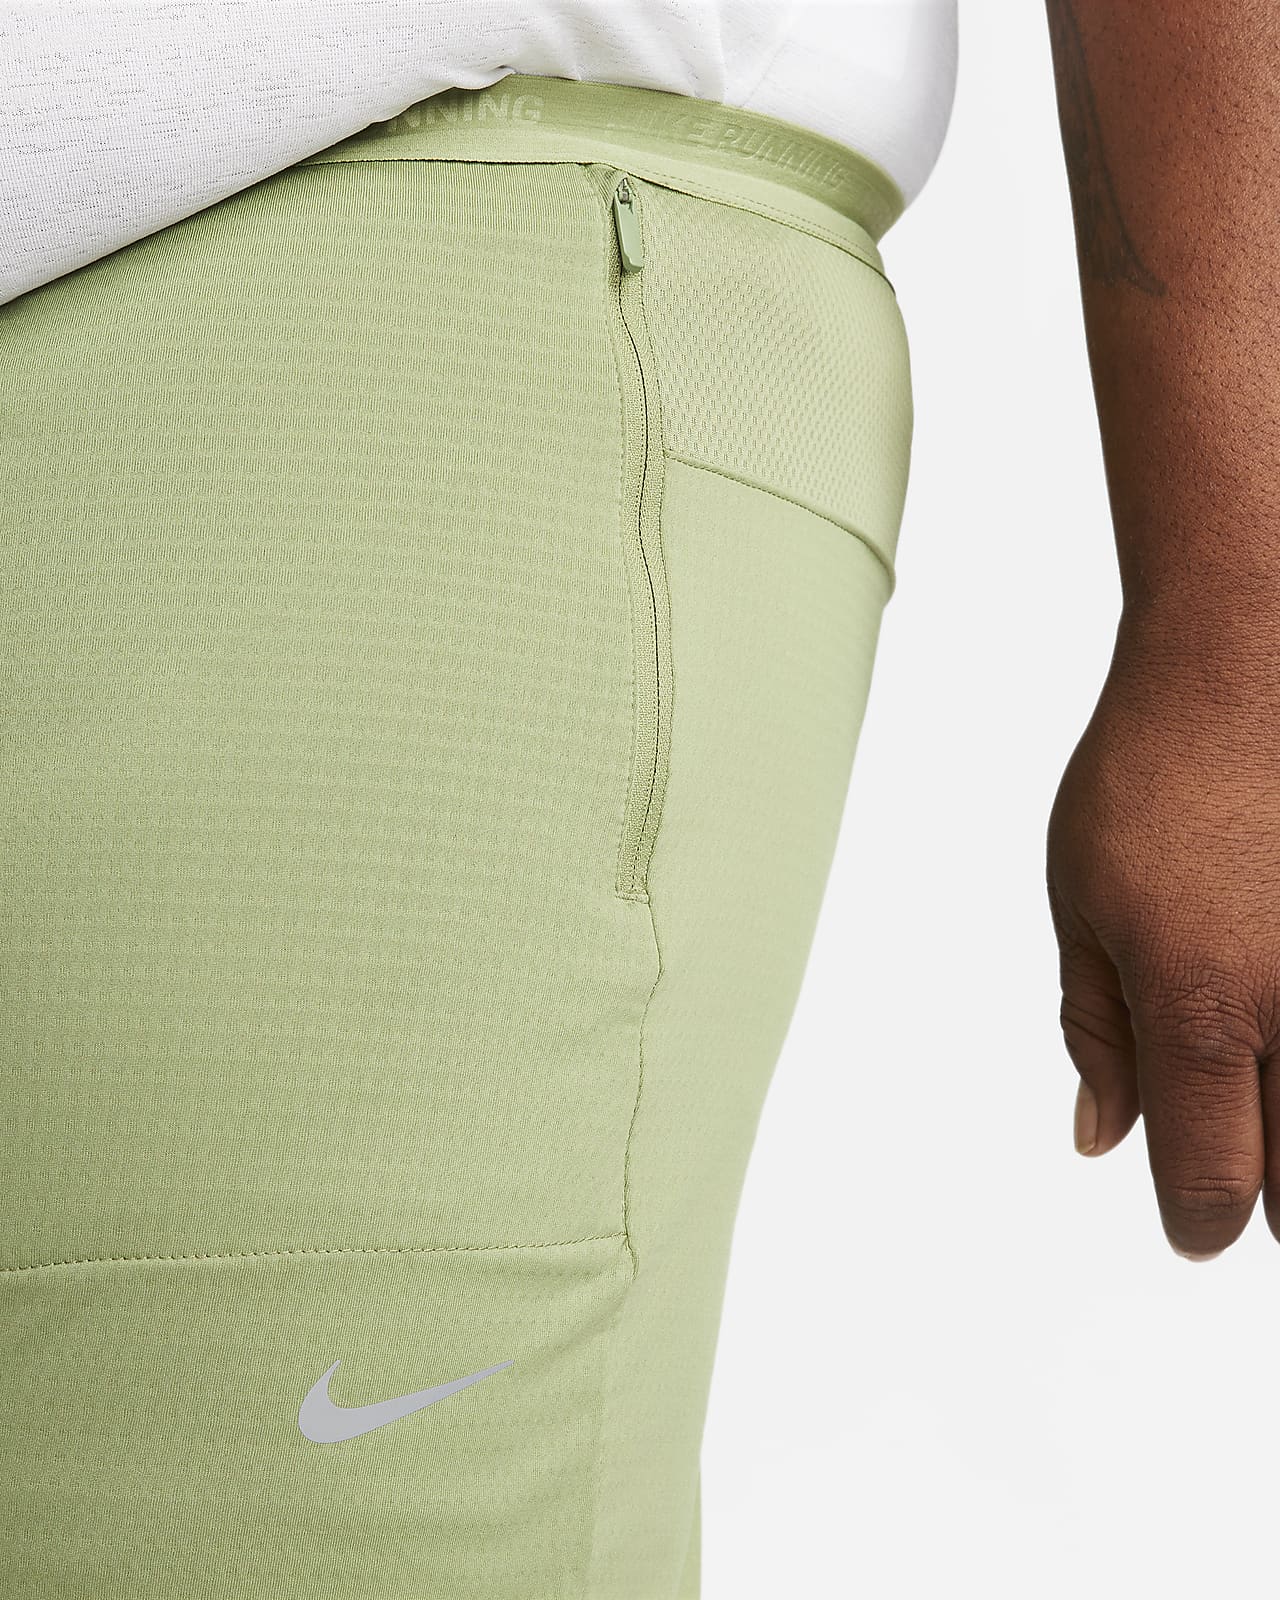 Nike Dri-Fit Running Pants wz zip pocket n drawstrings. Black